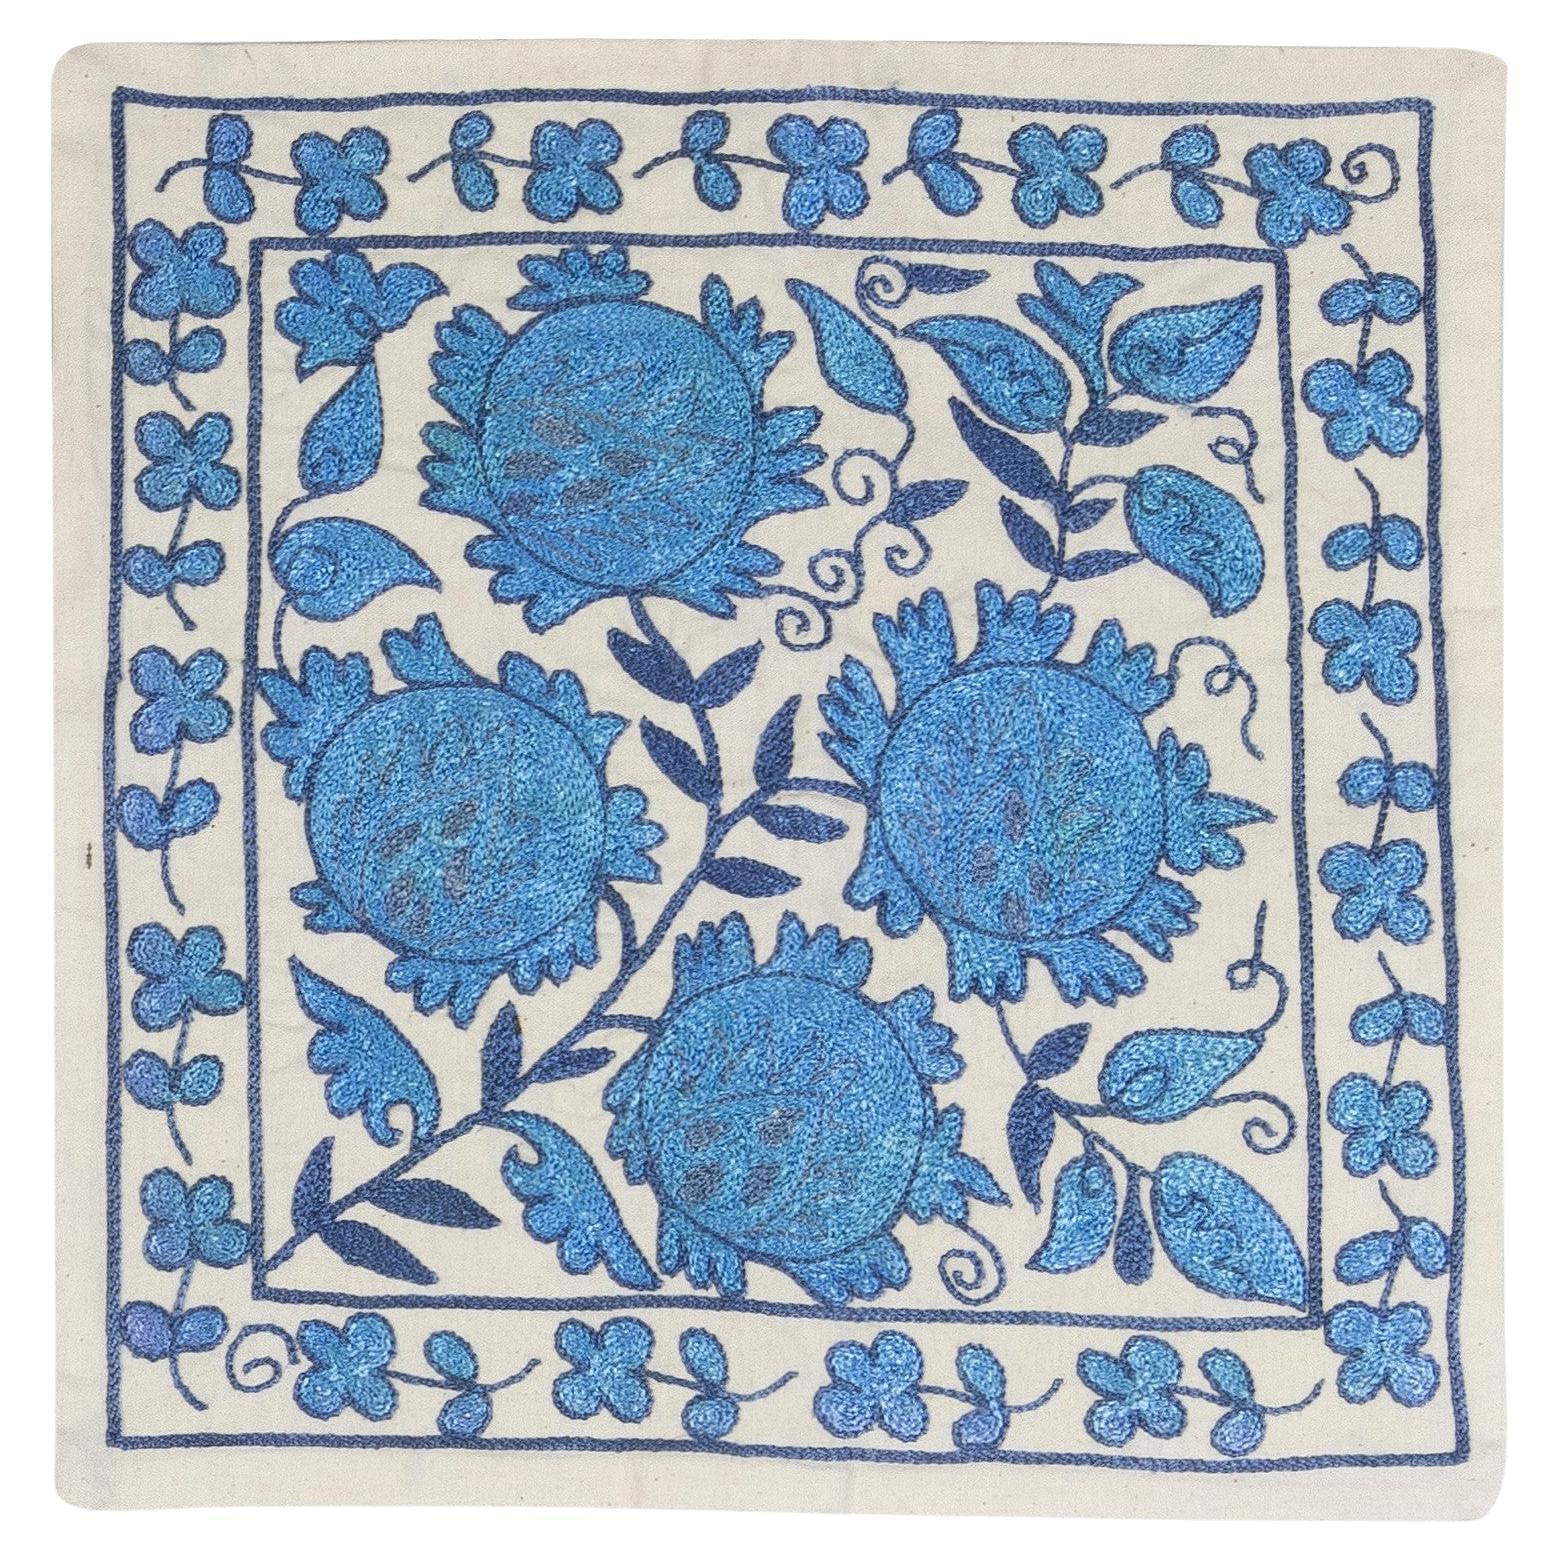 17"x18" New Handmade Silk Embroidered Suzani Cushion Cover in Cream & Light Blue